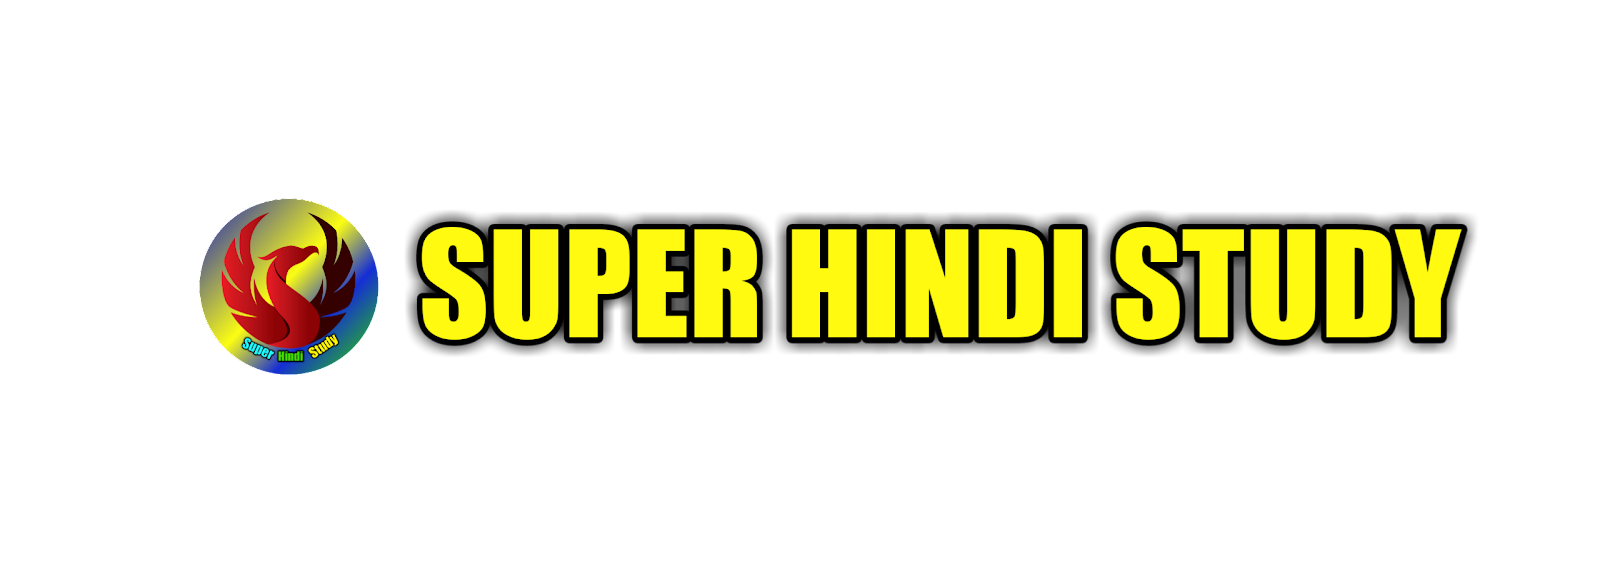 Super hindi study 